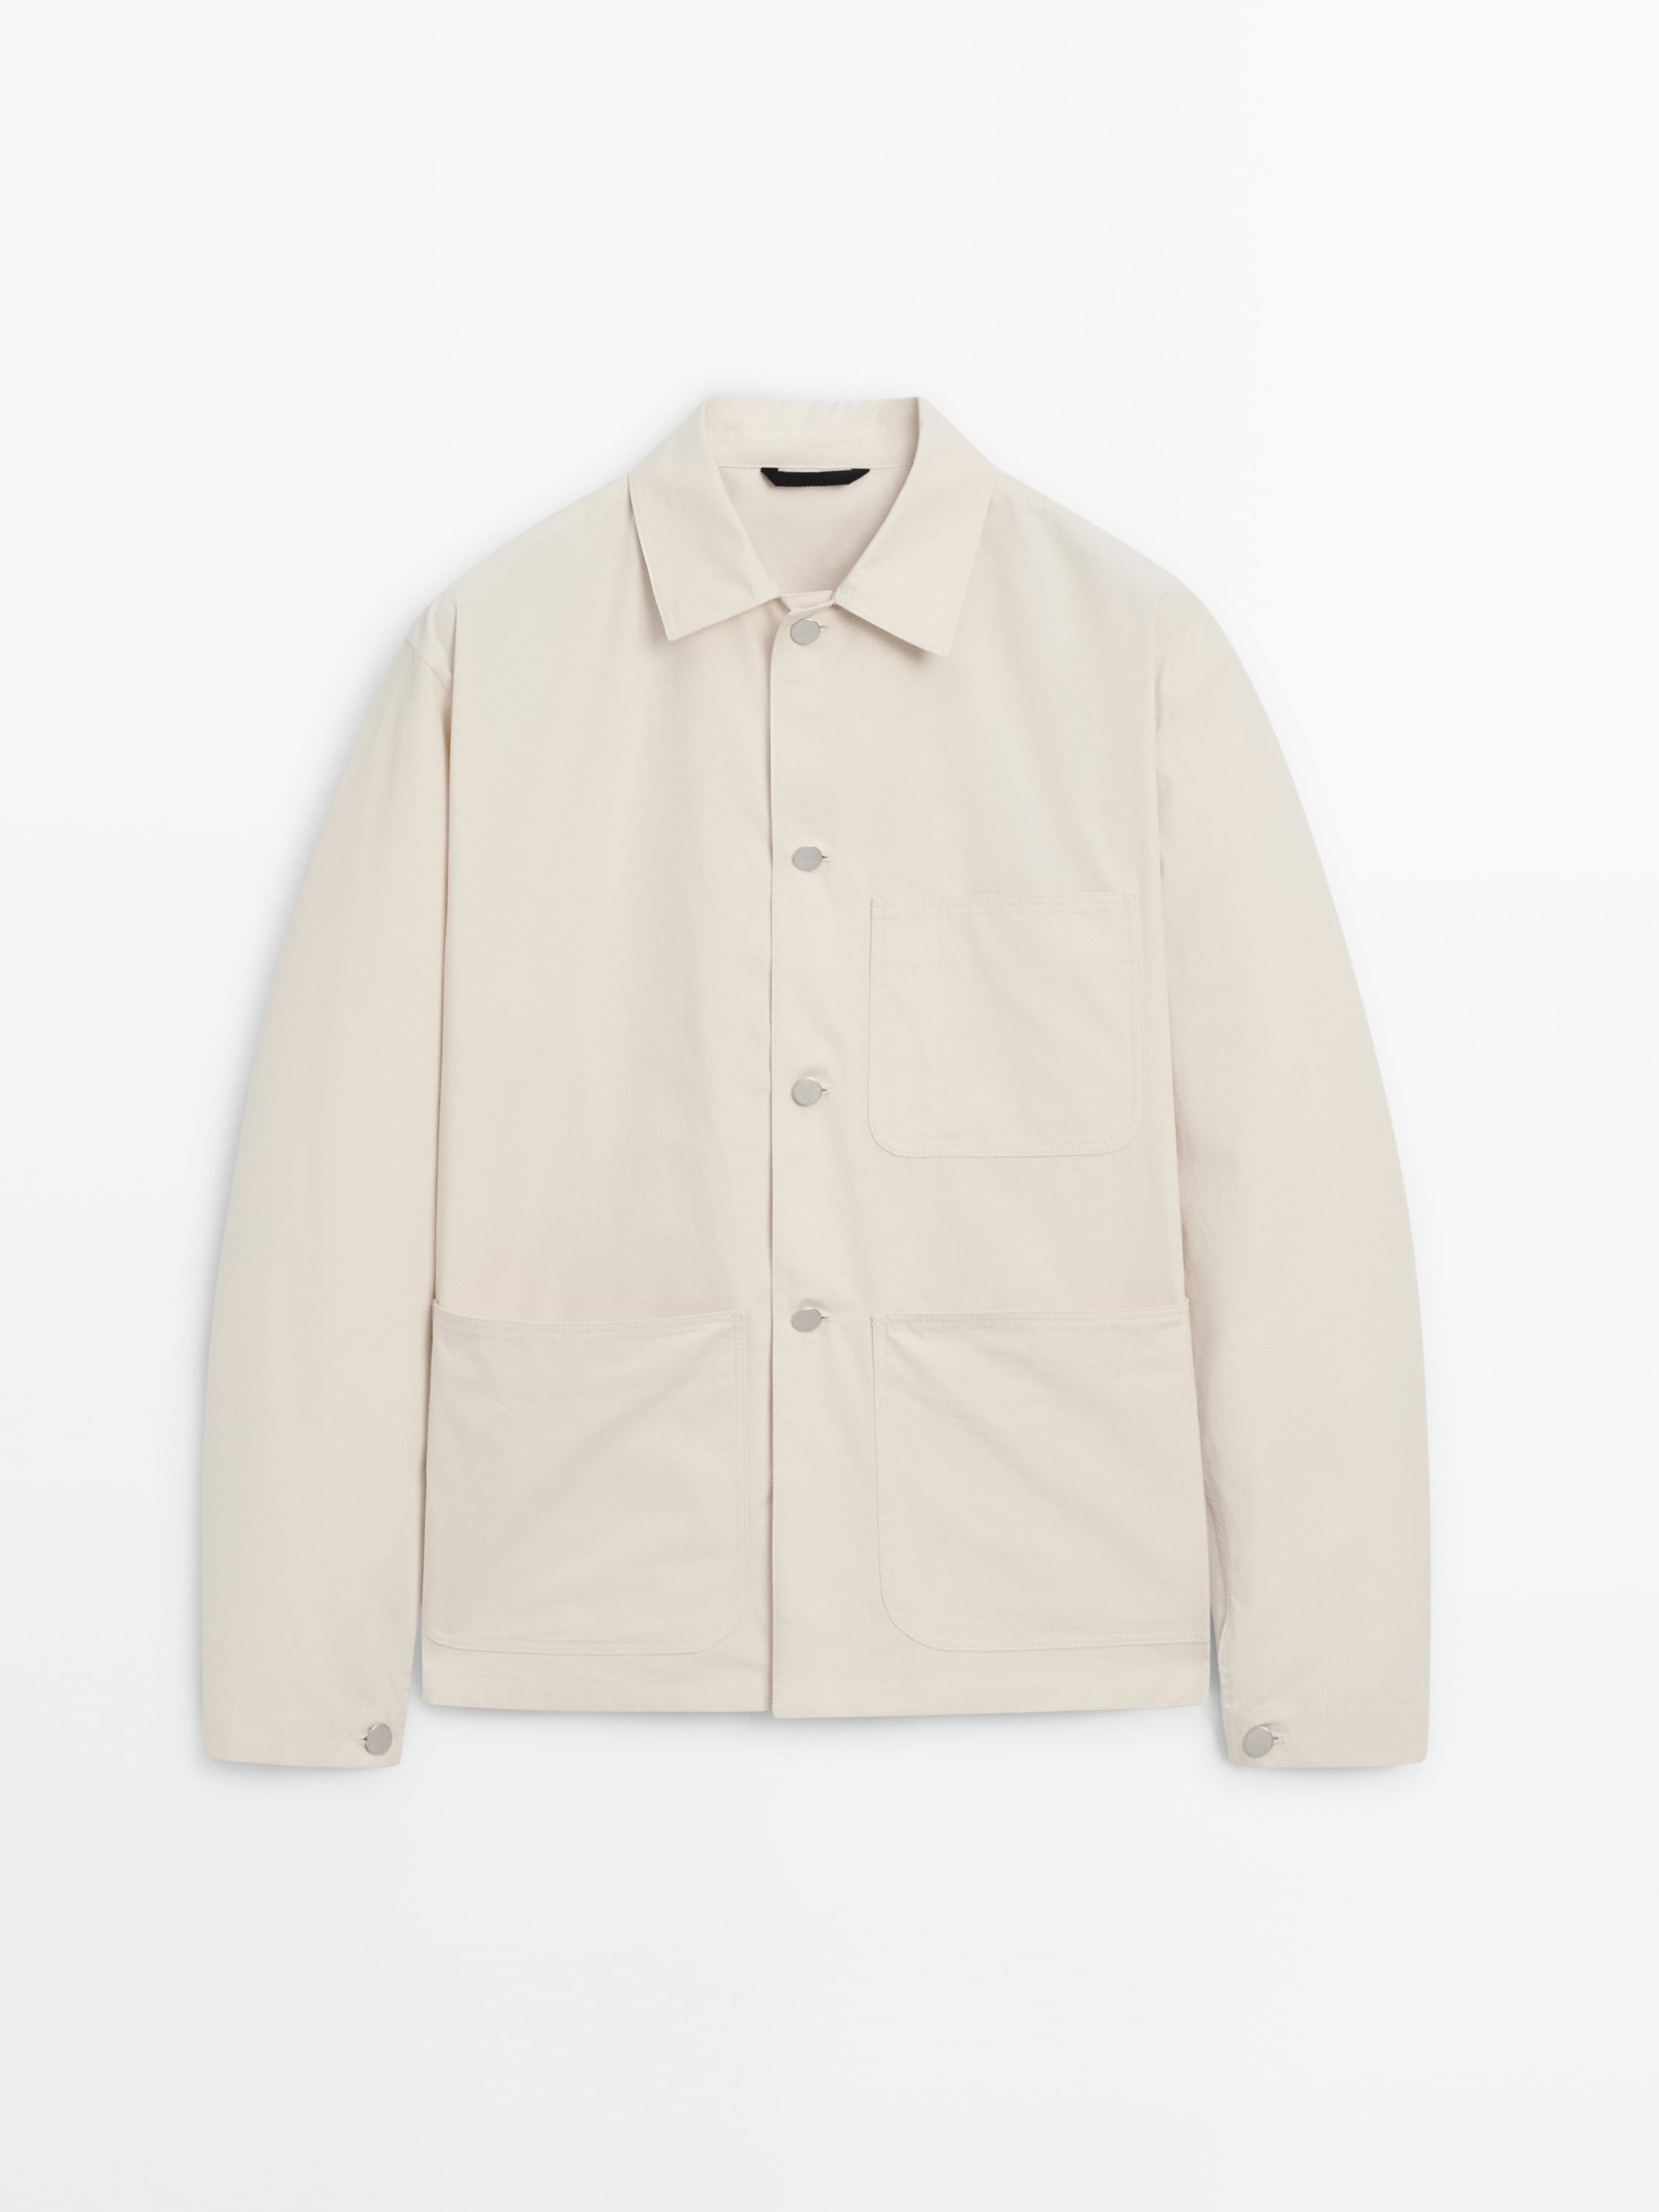 100% cotton overshirt - Studio